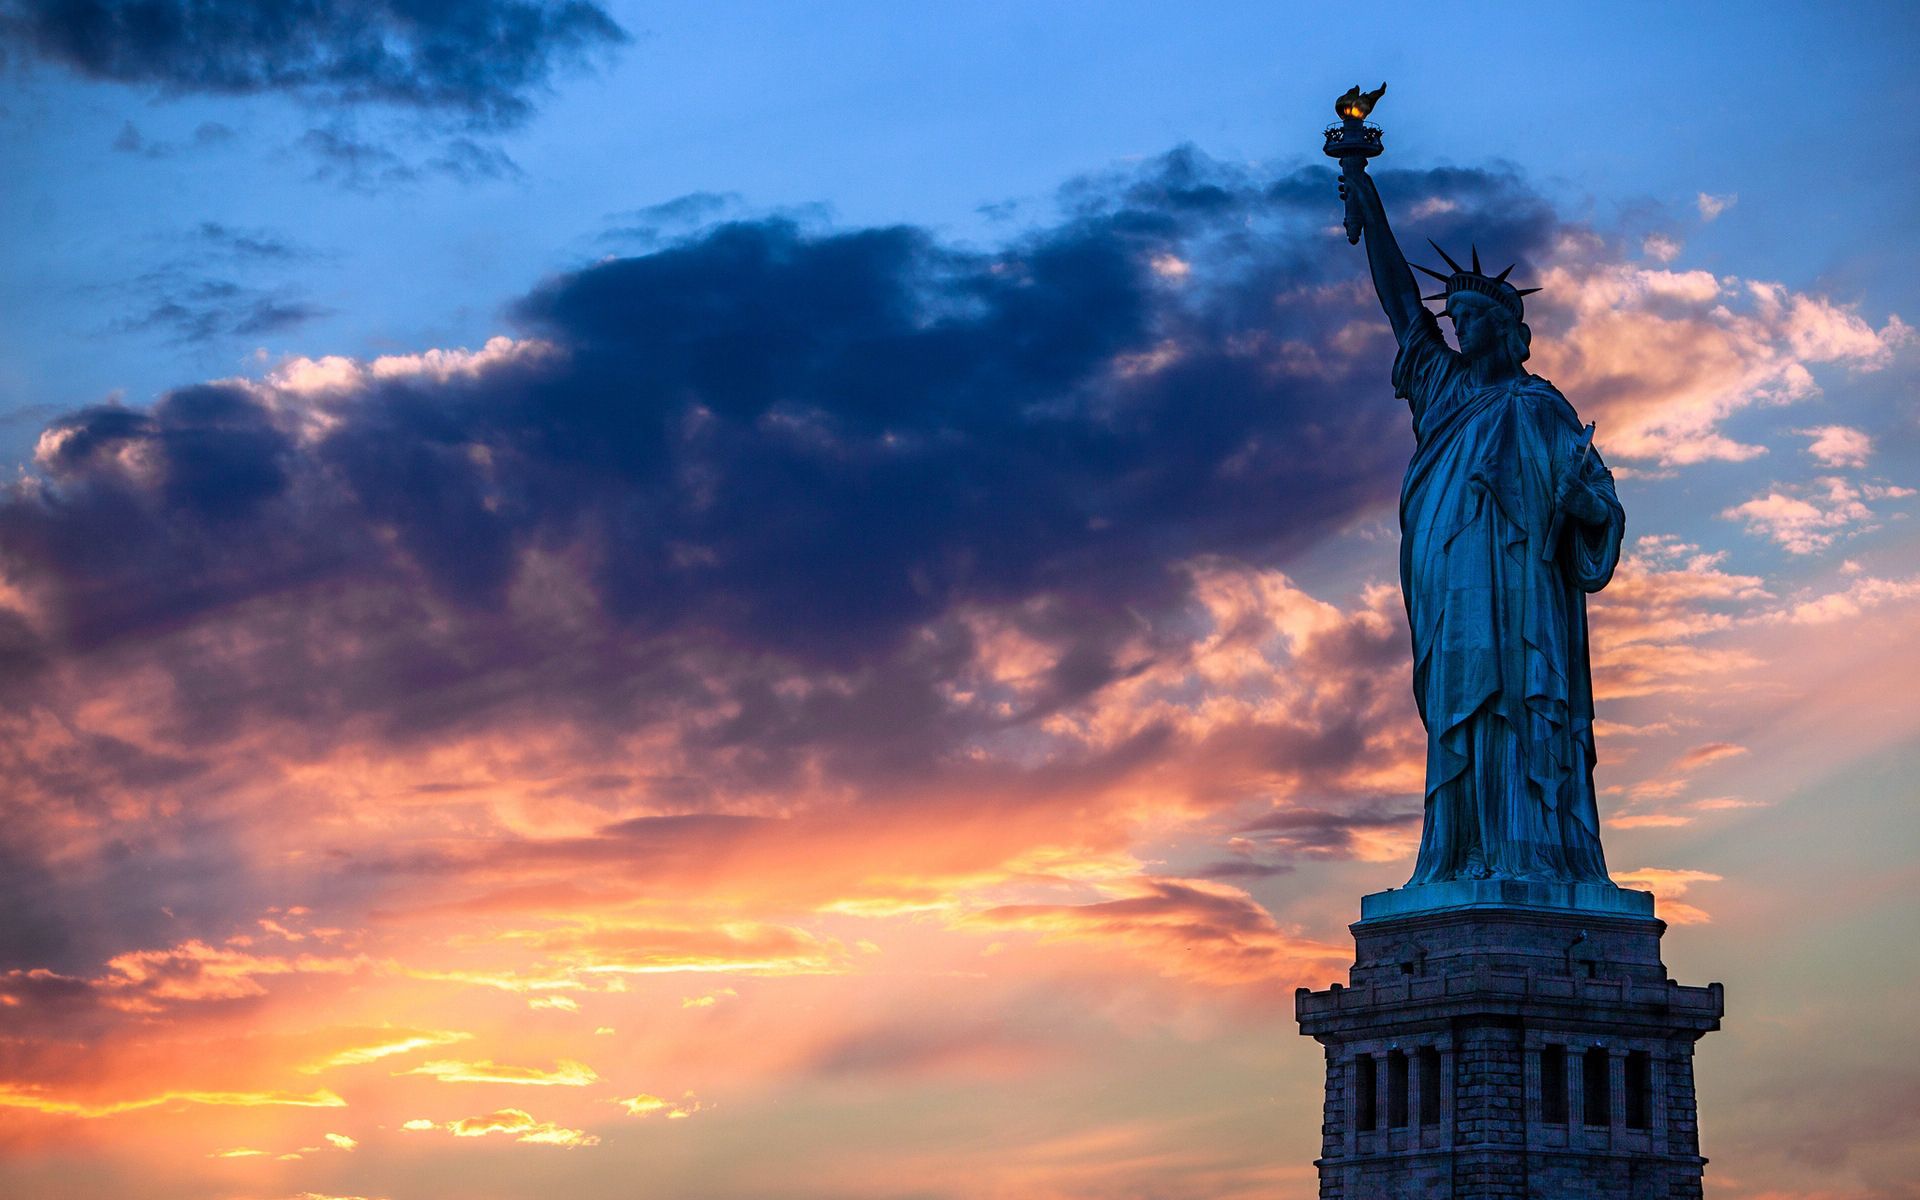 Free New York City Statue of Liberty USA America HD Desktop wallpapers backgrounds wall murals downloads A21